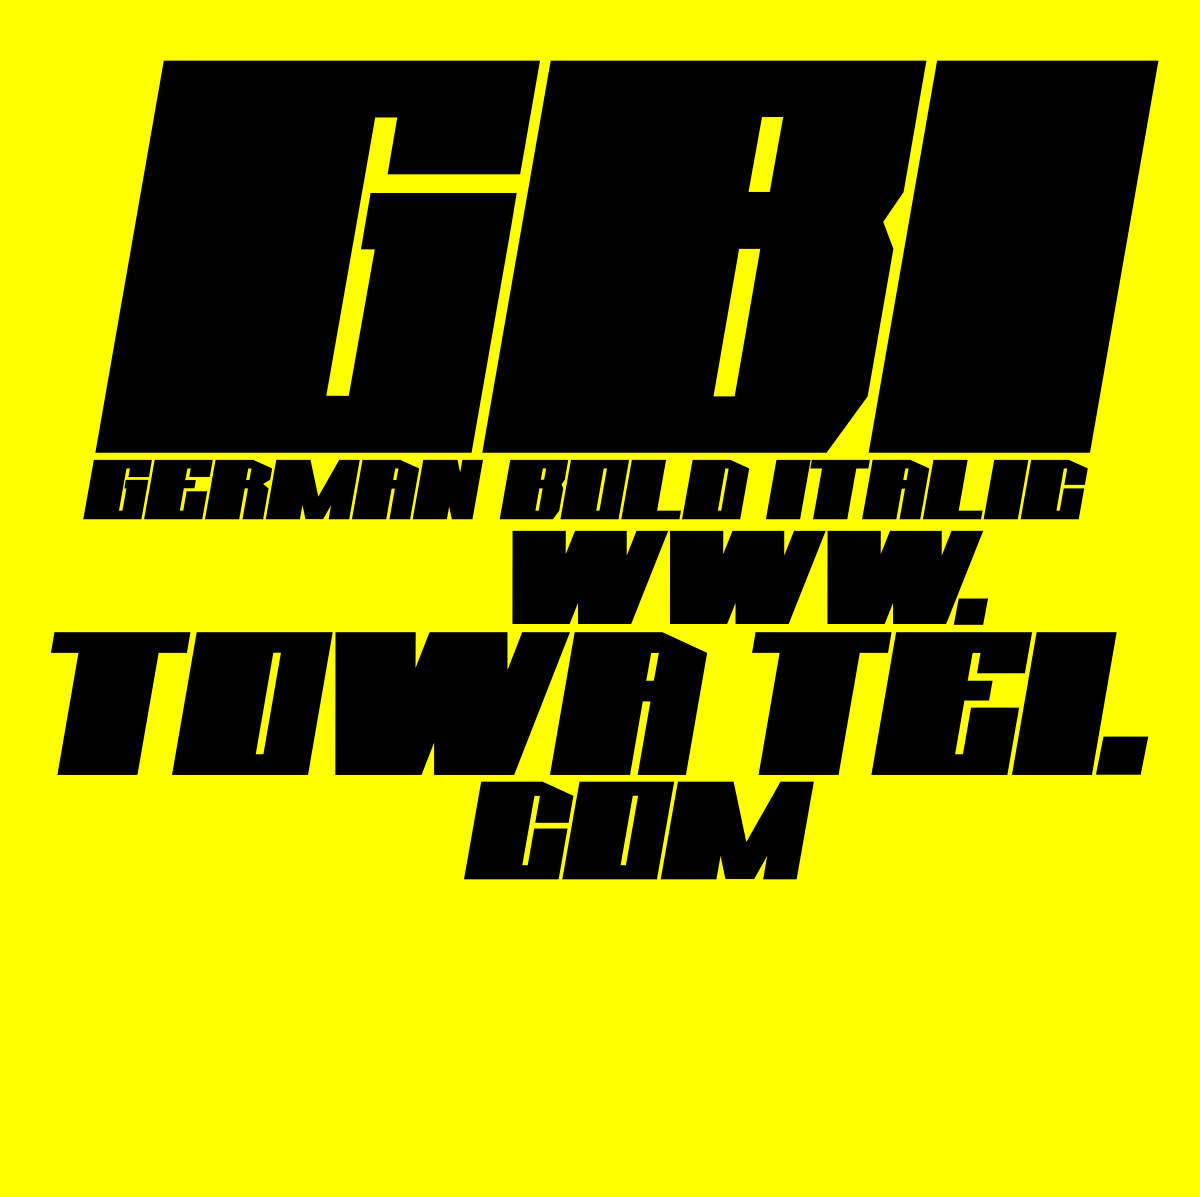 Towa Tei featuring Kylie Minogue — GBI (German Bold Italic) cover artwork